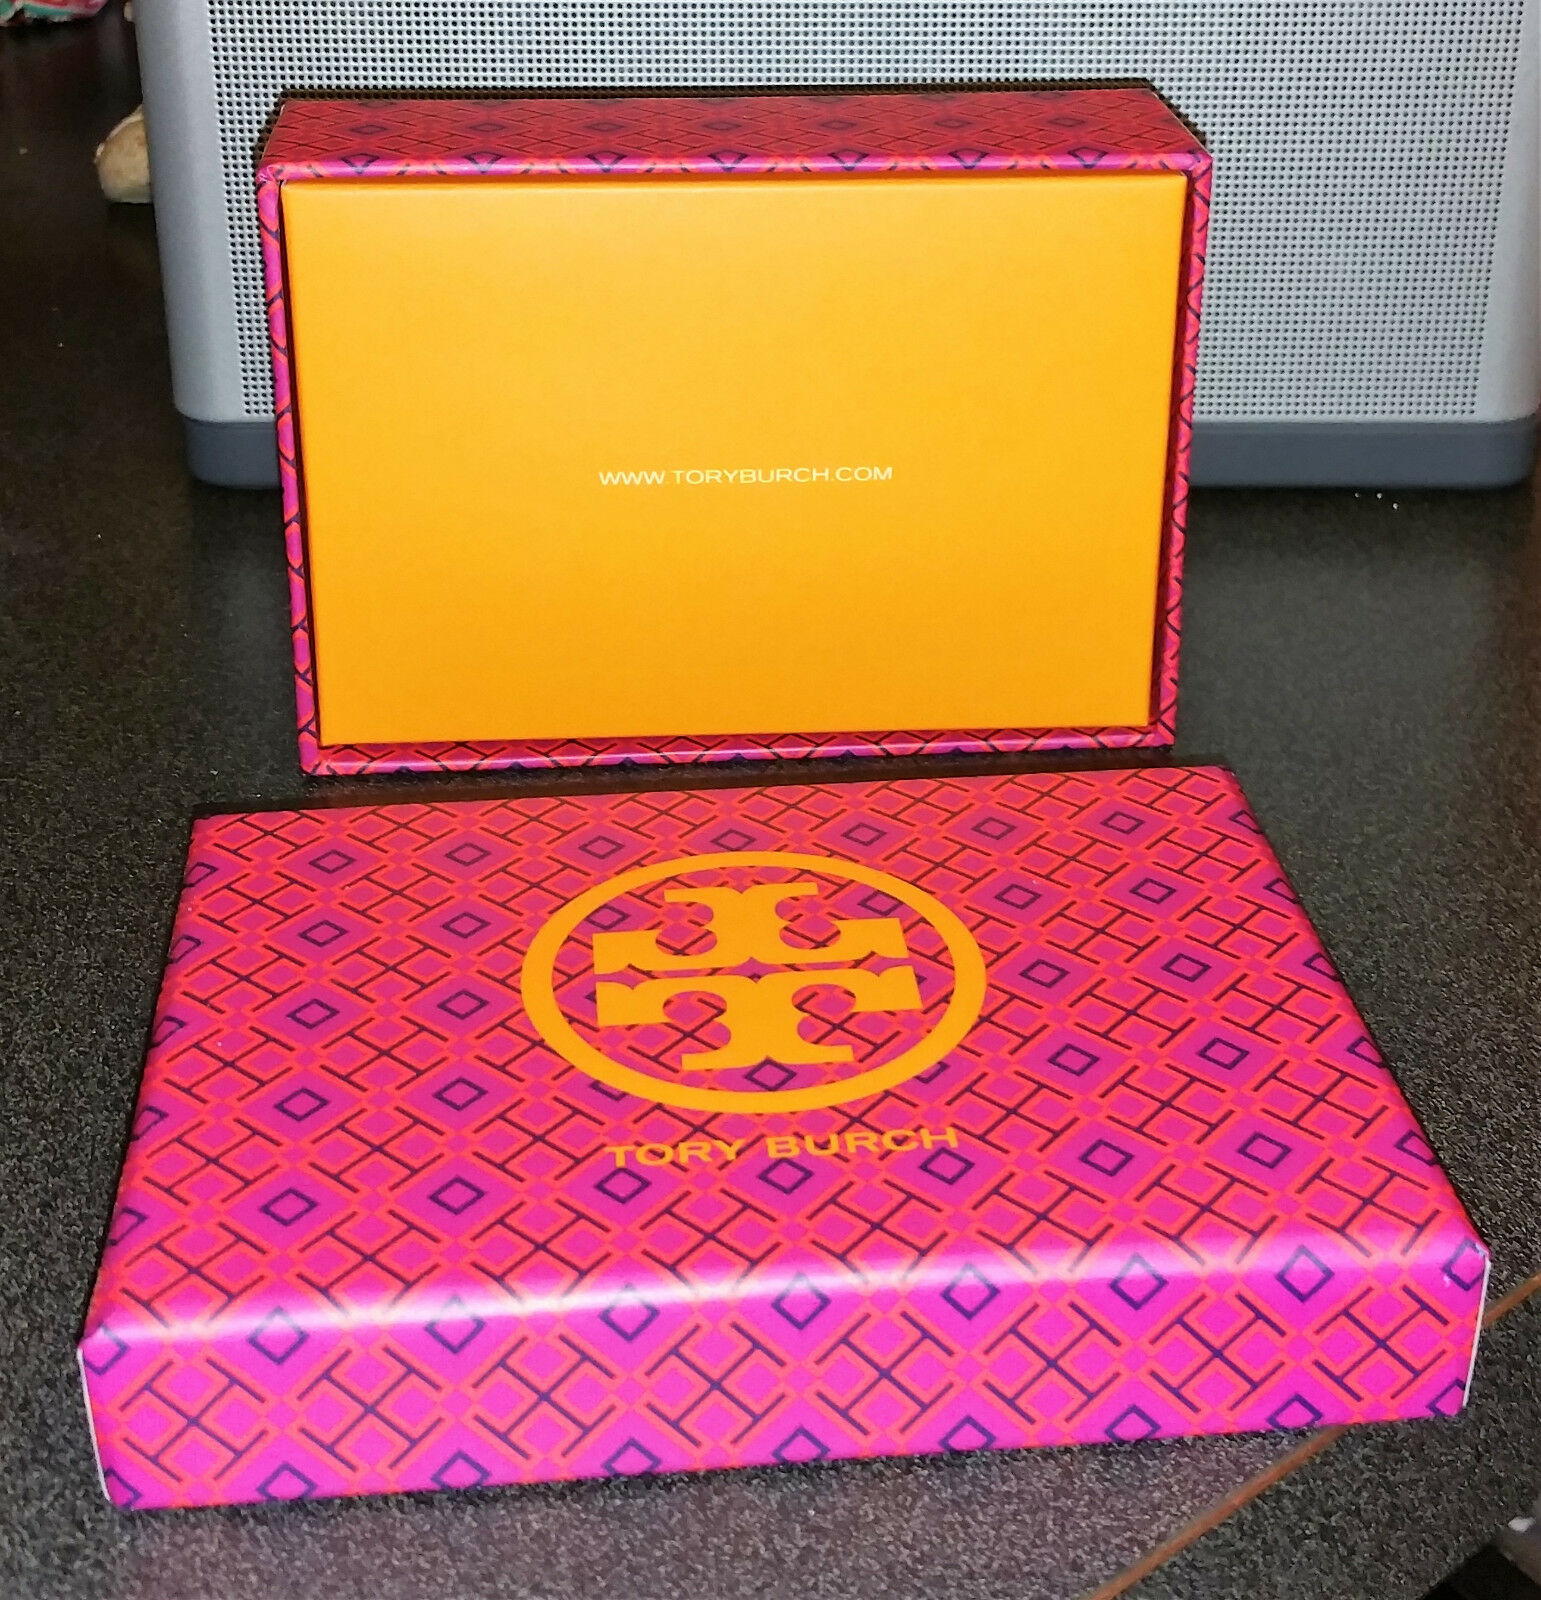 Tory Burch Gift Box w/ Orange Ribbon Bow, Insert, gift card flip over ...